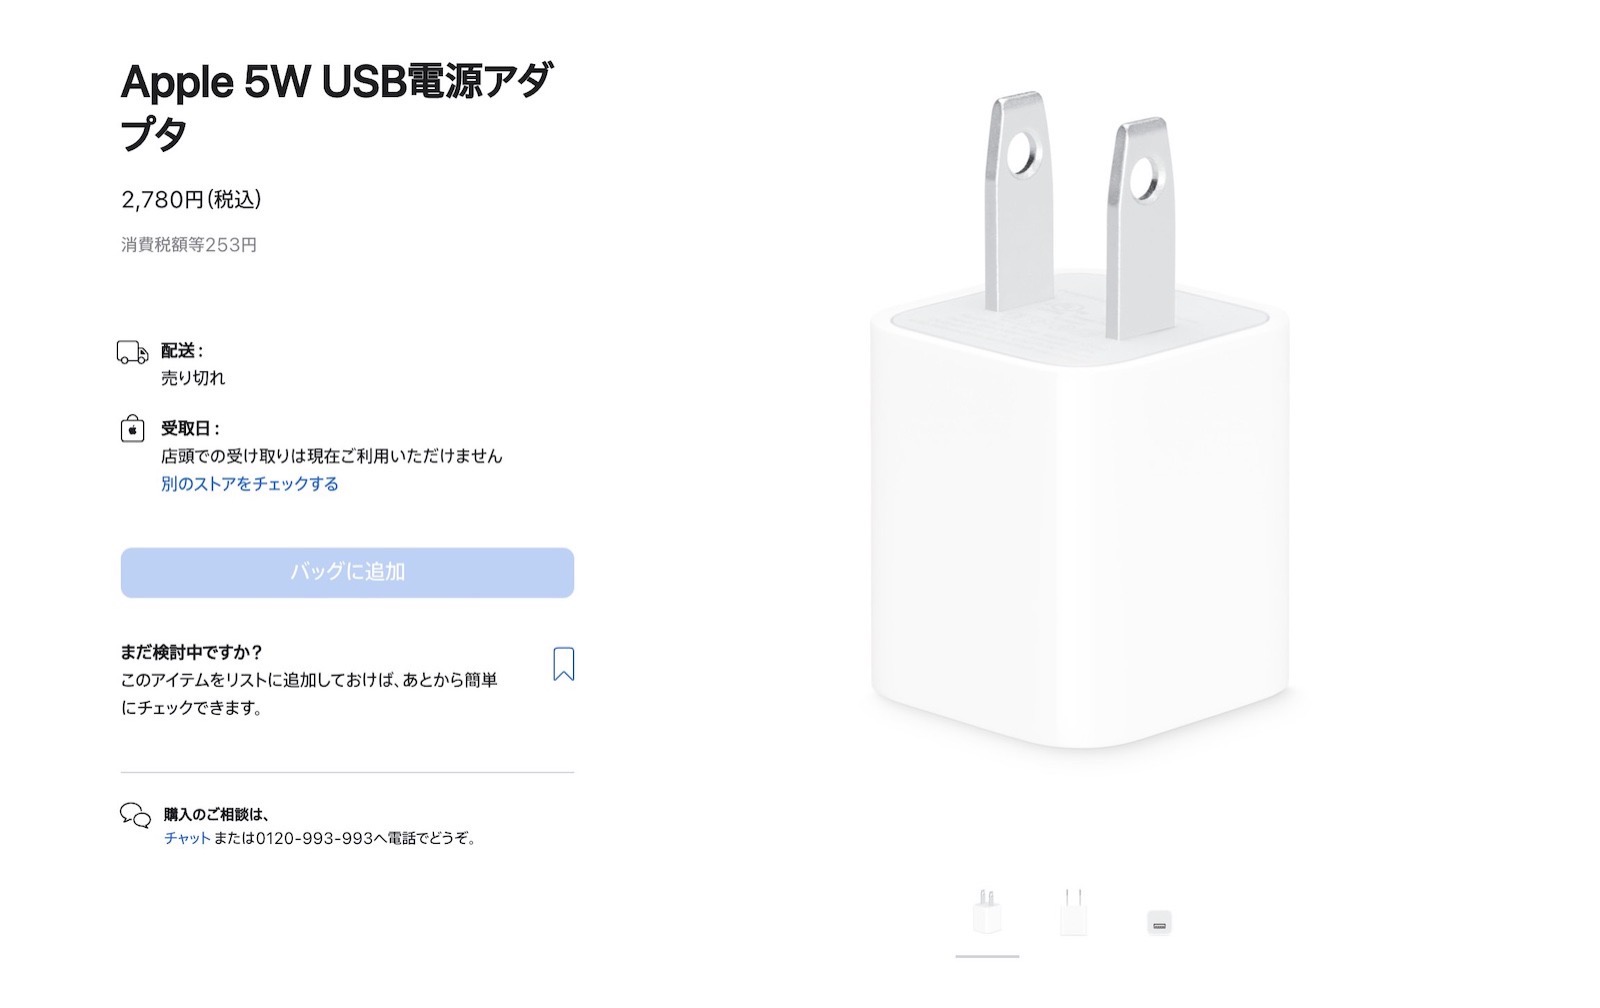 Apple 5W USB Adaptor